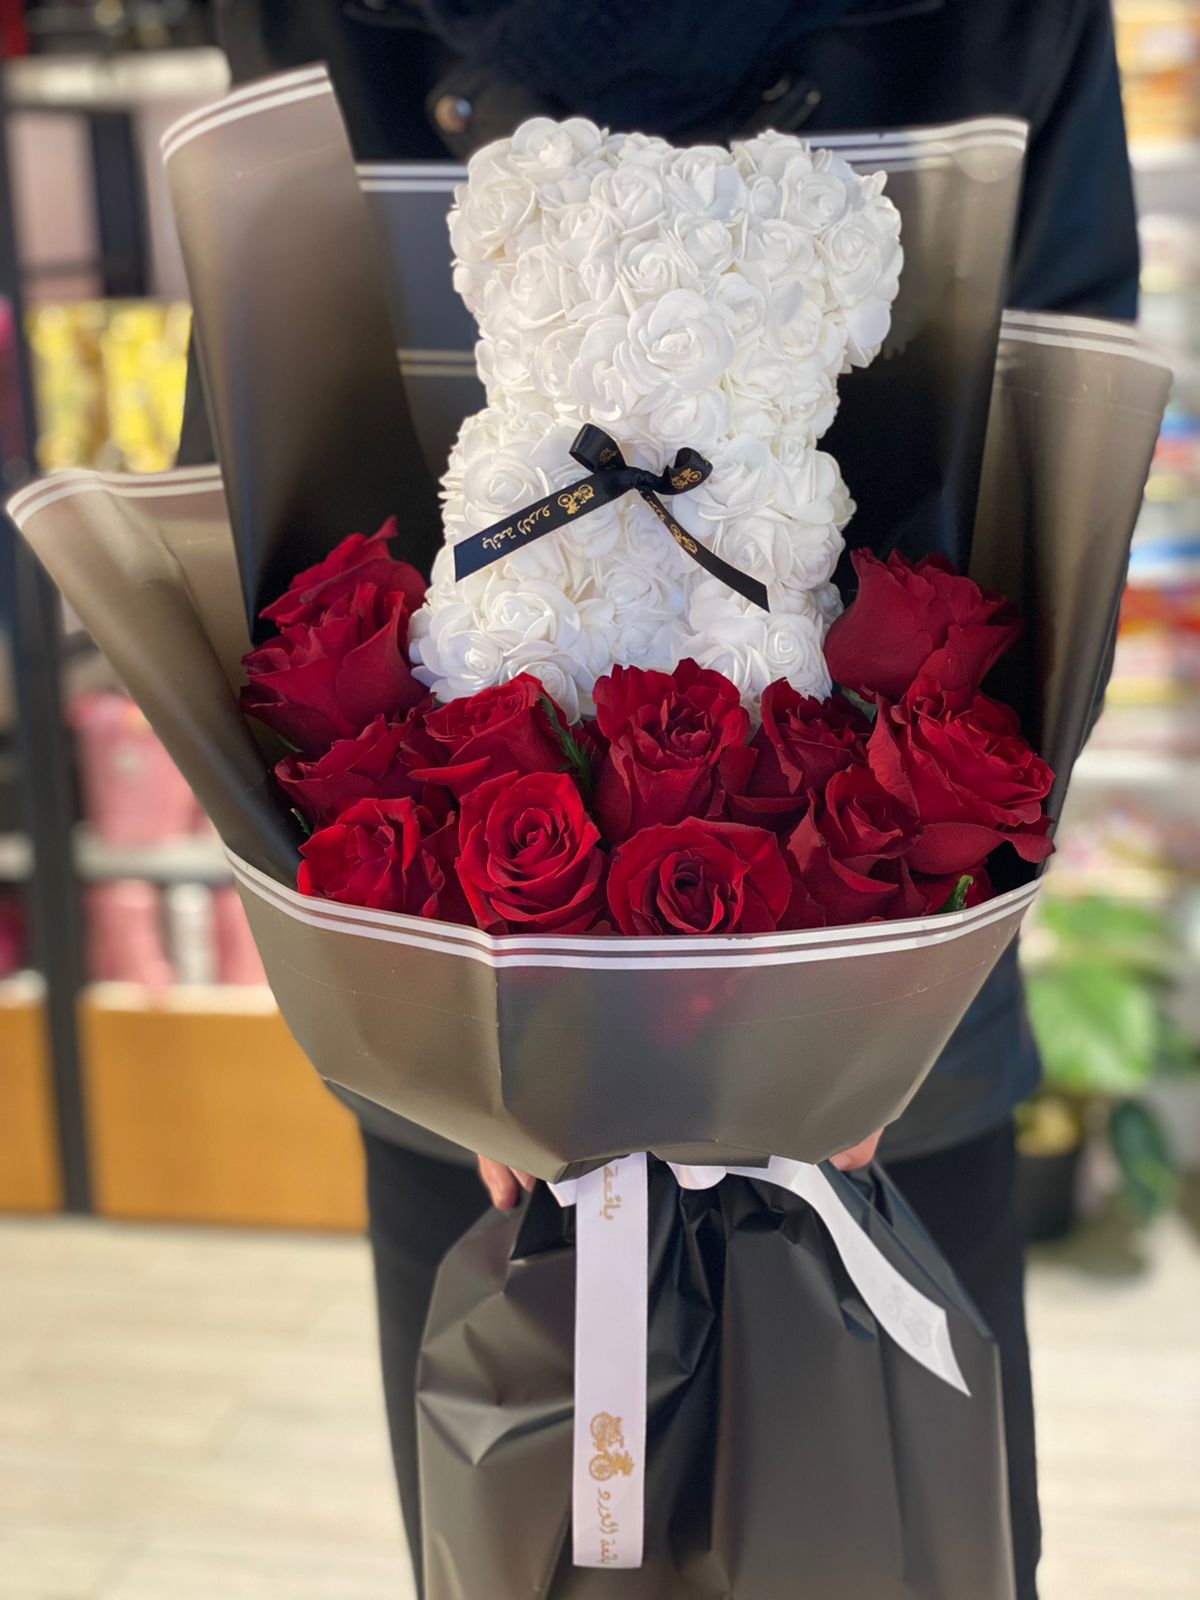 Rose bouquet with teddy bear - Bae3at Elward flower shop 